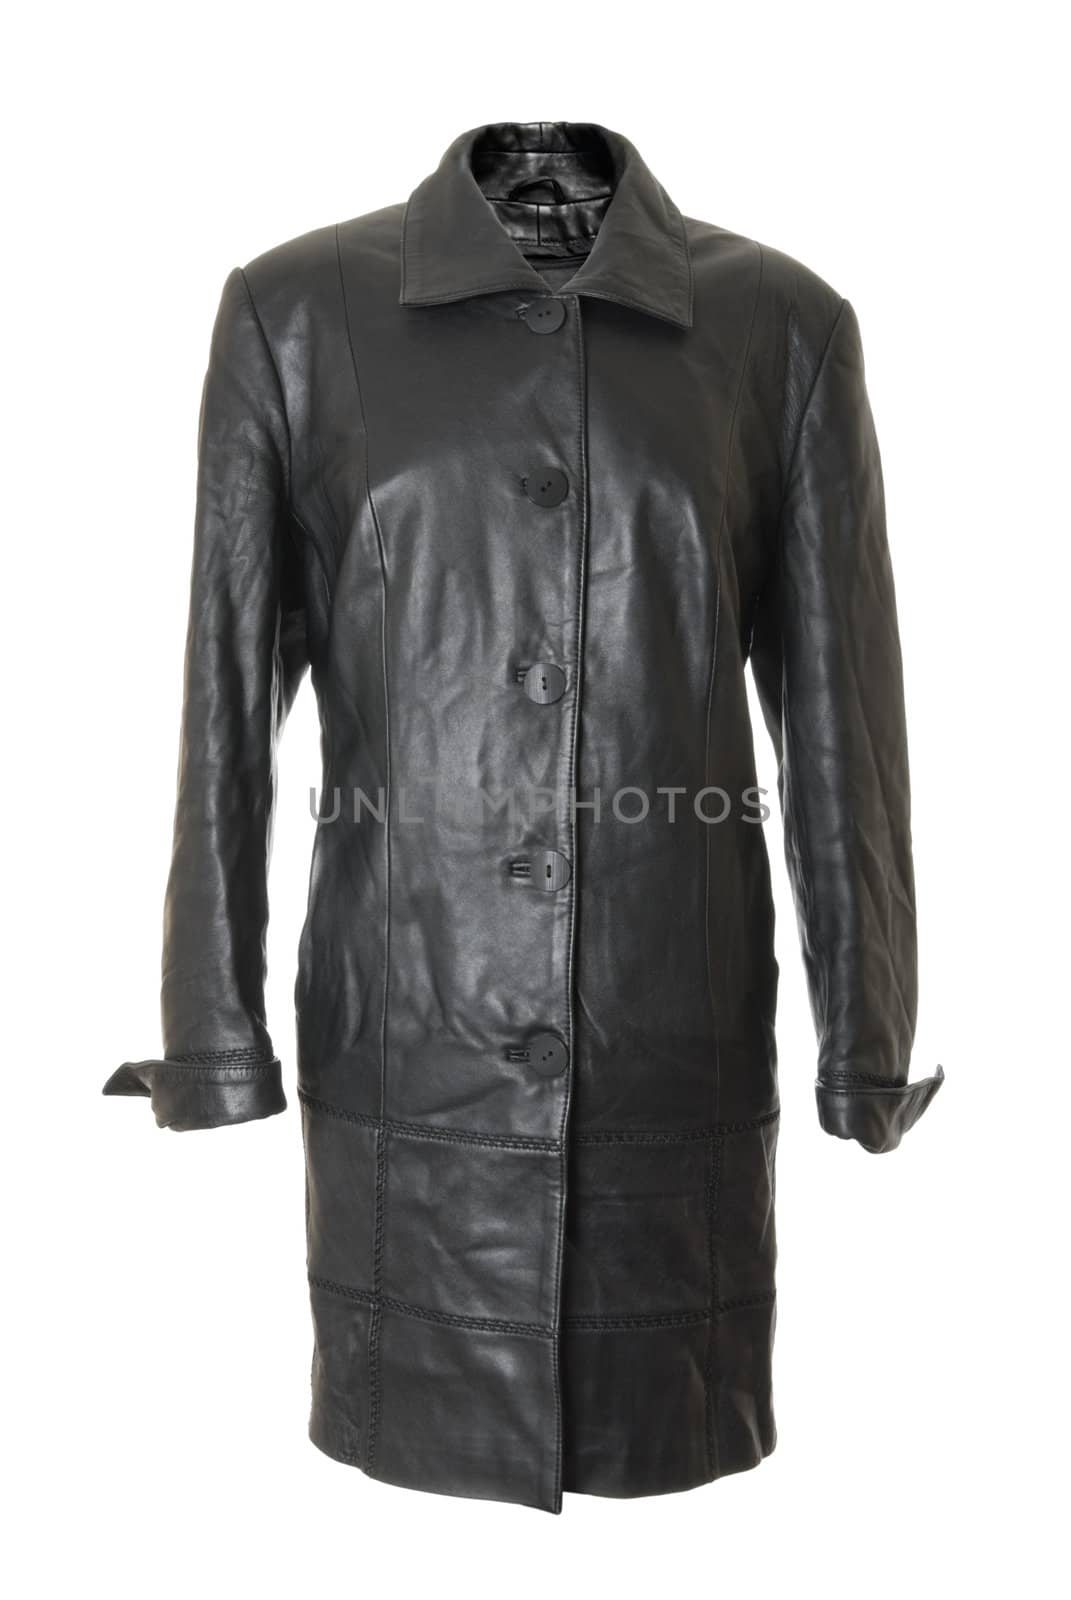 Female black and long leather coat. Isolated on white background